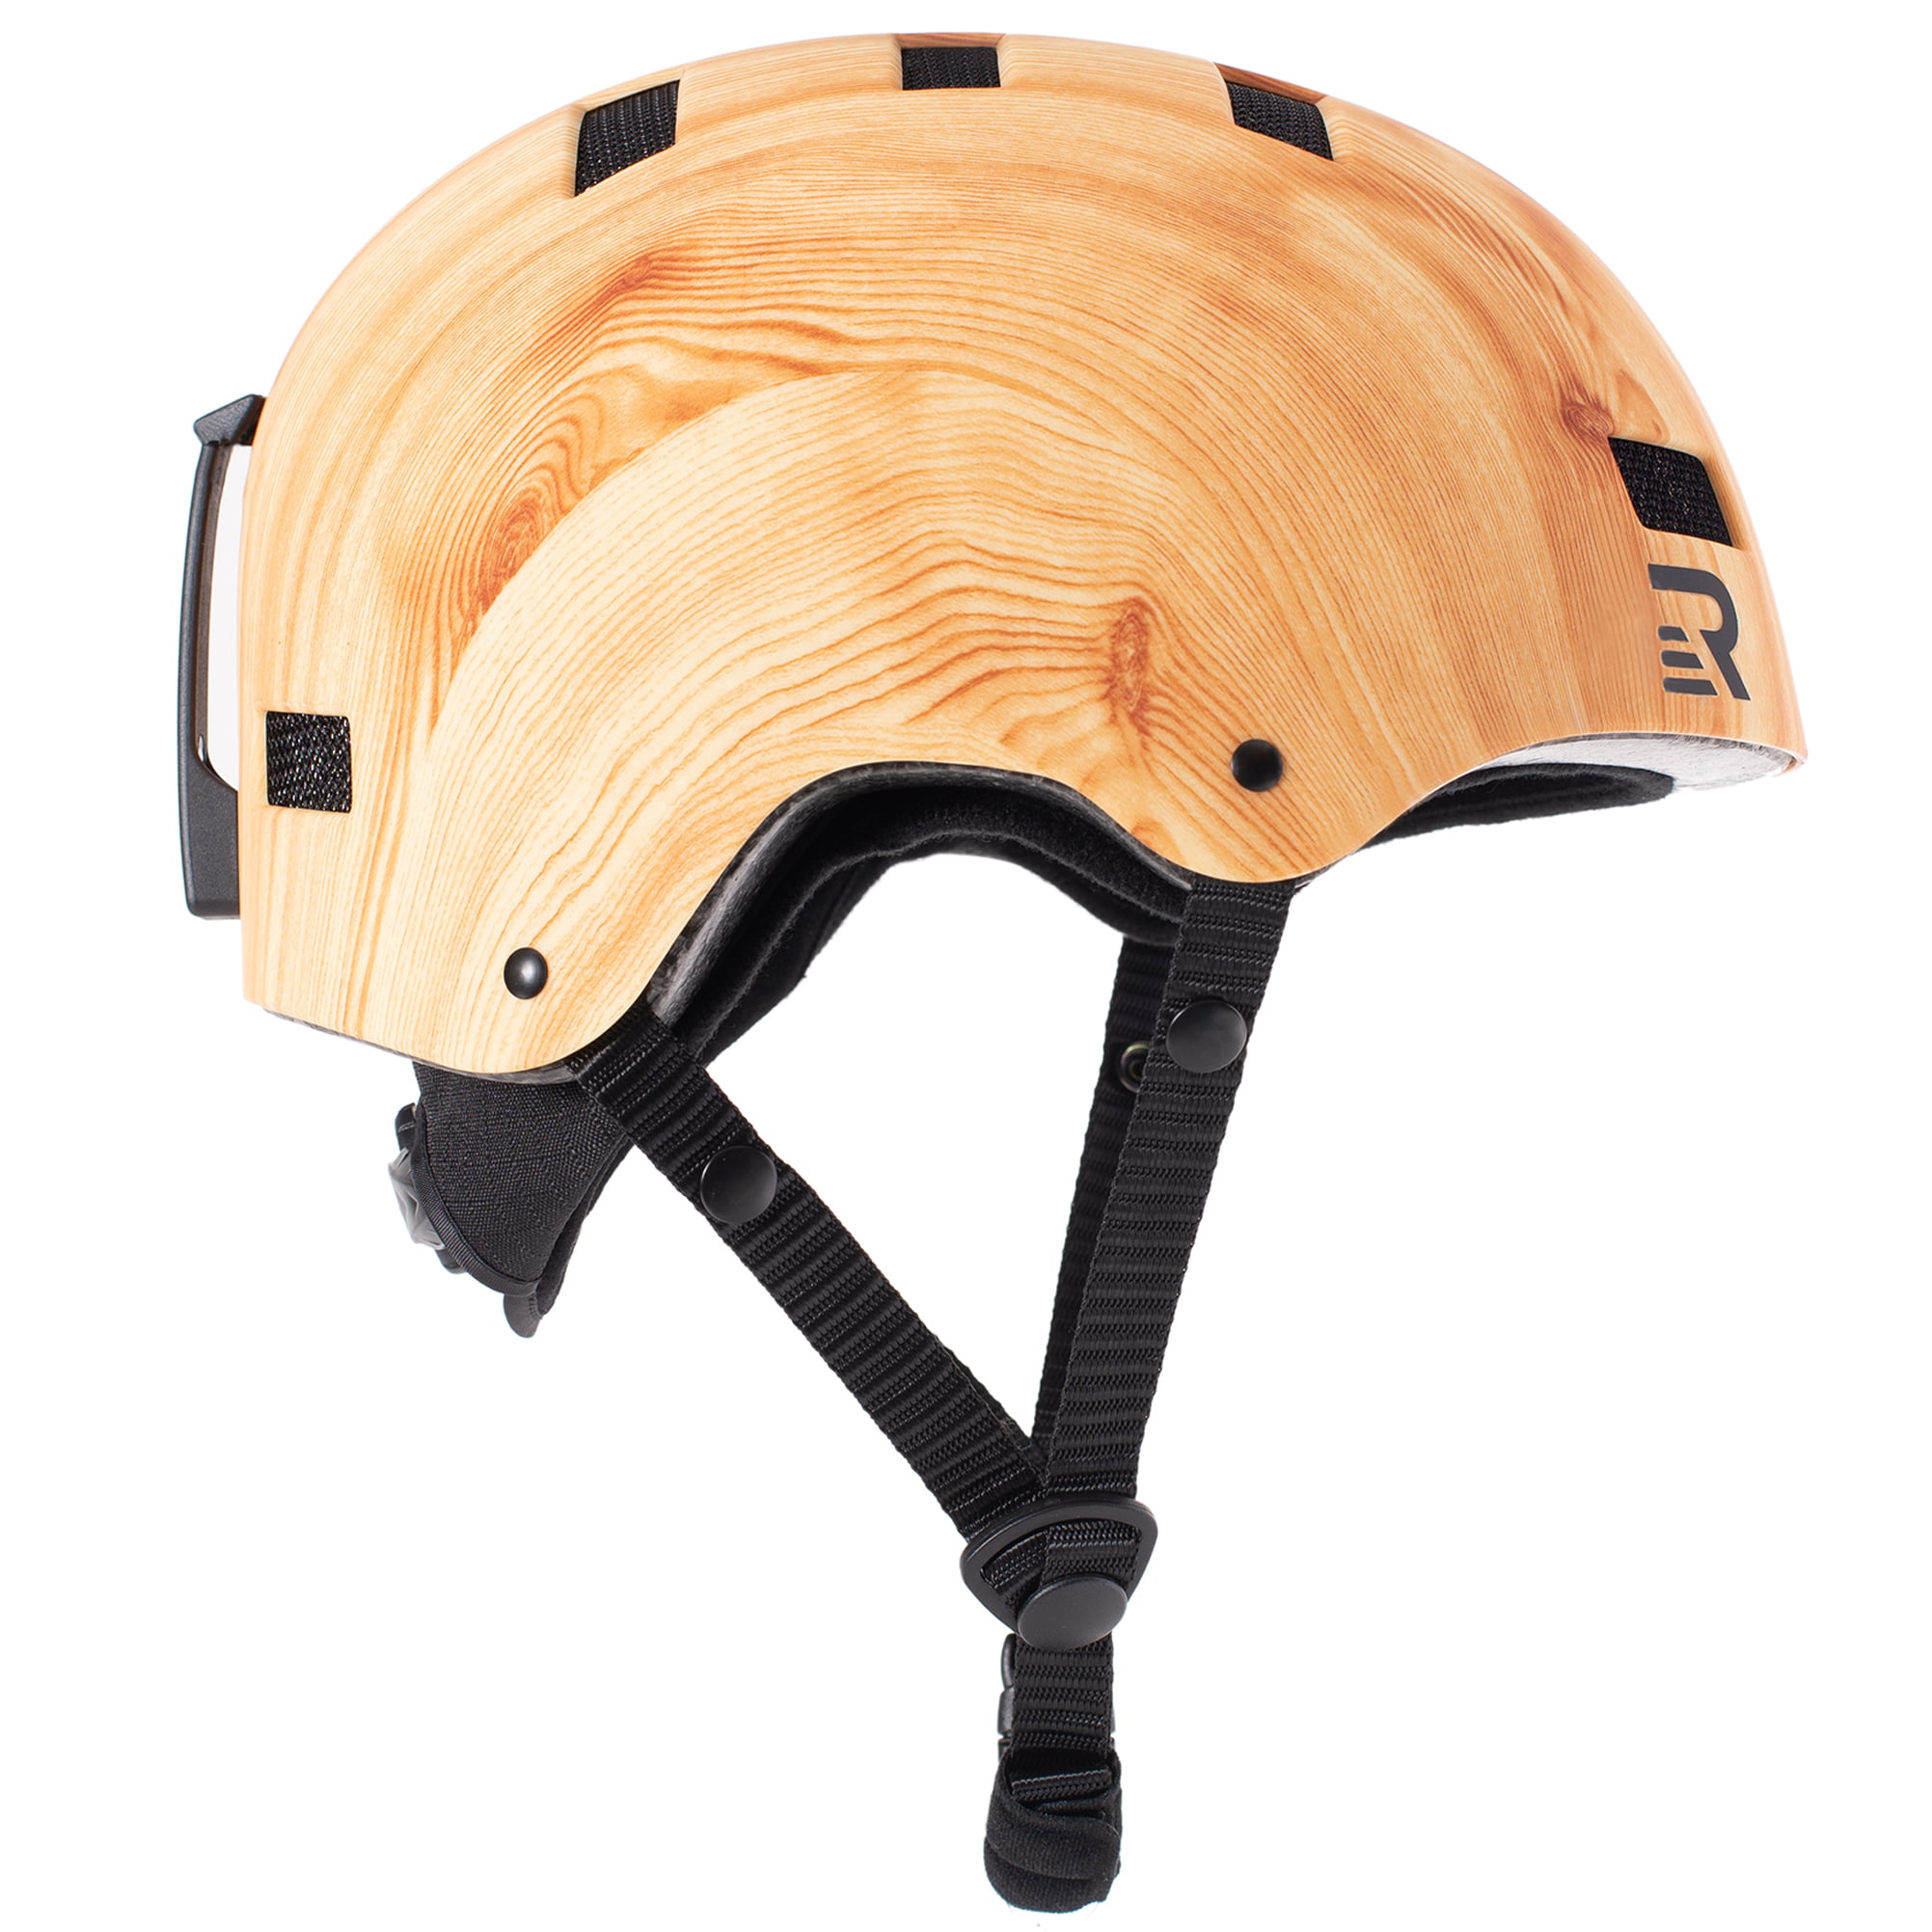 Matte Burnt Orange Retrospec Traverse H2 2-in-1 Convertible Helmet with 10 Vents Model:3006 Large/X-large 56-60cm 